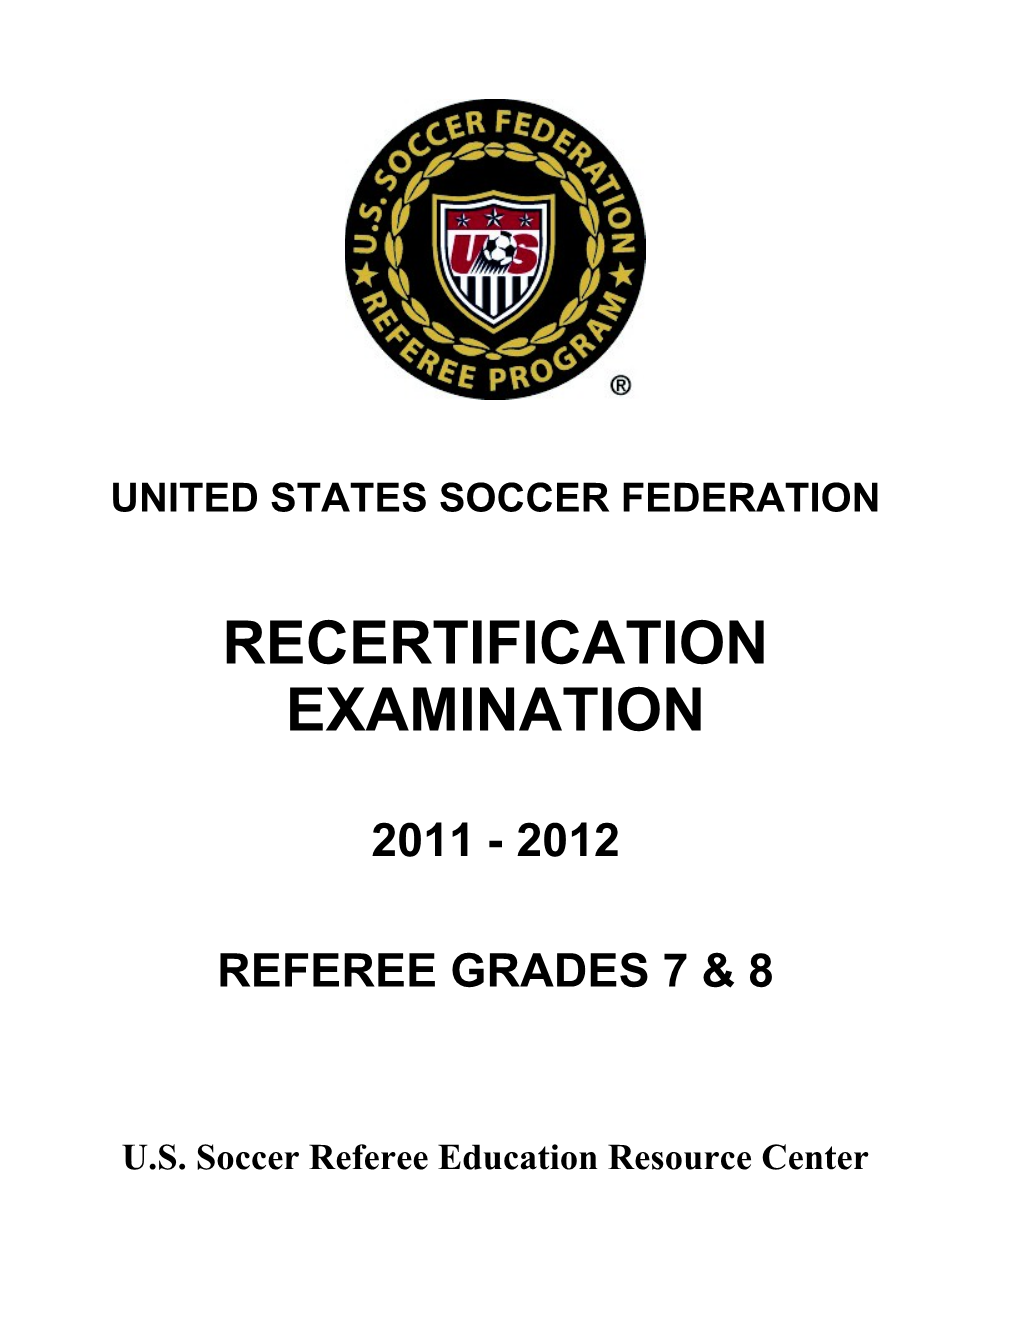 EXAM Referee Grade 7 & 8 Entry Alternate